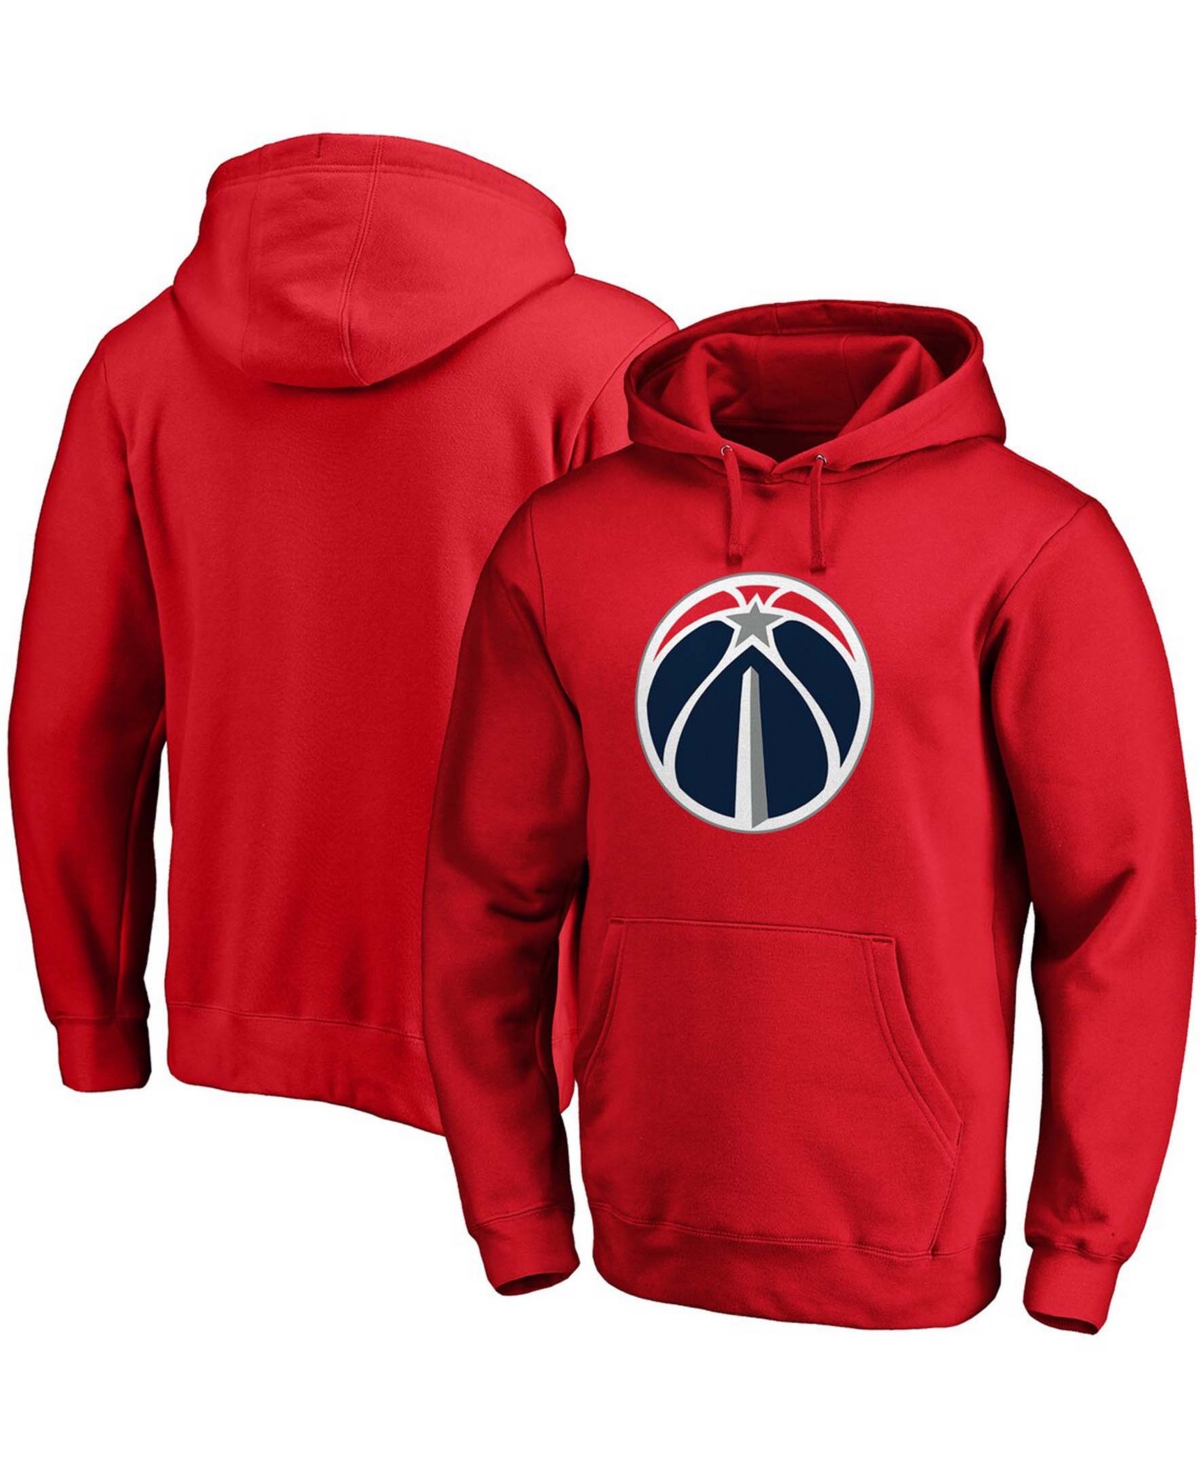 Shop Fanatics Men's Red Washington Wizards Primary Team Logo Pullover Hoodie